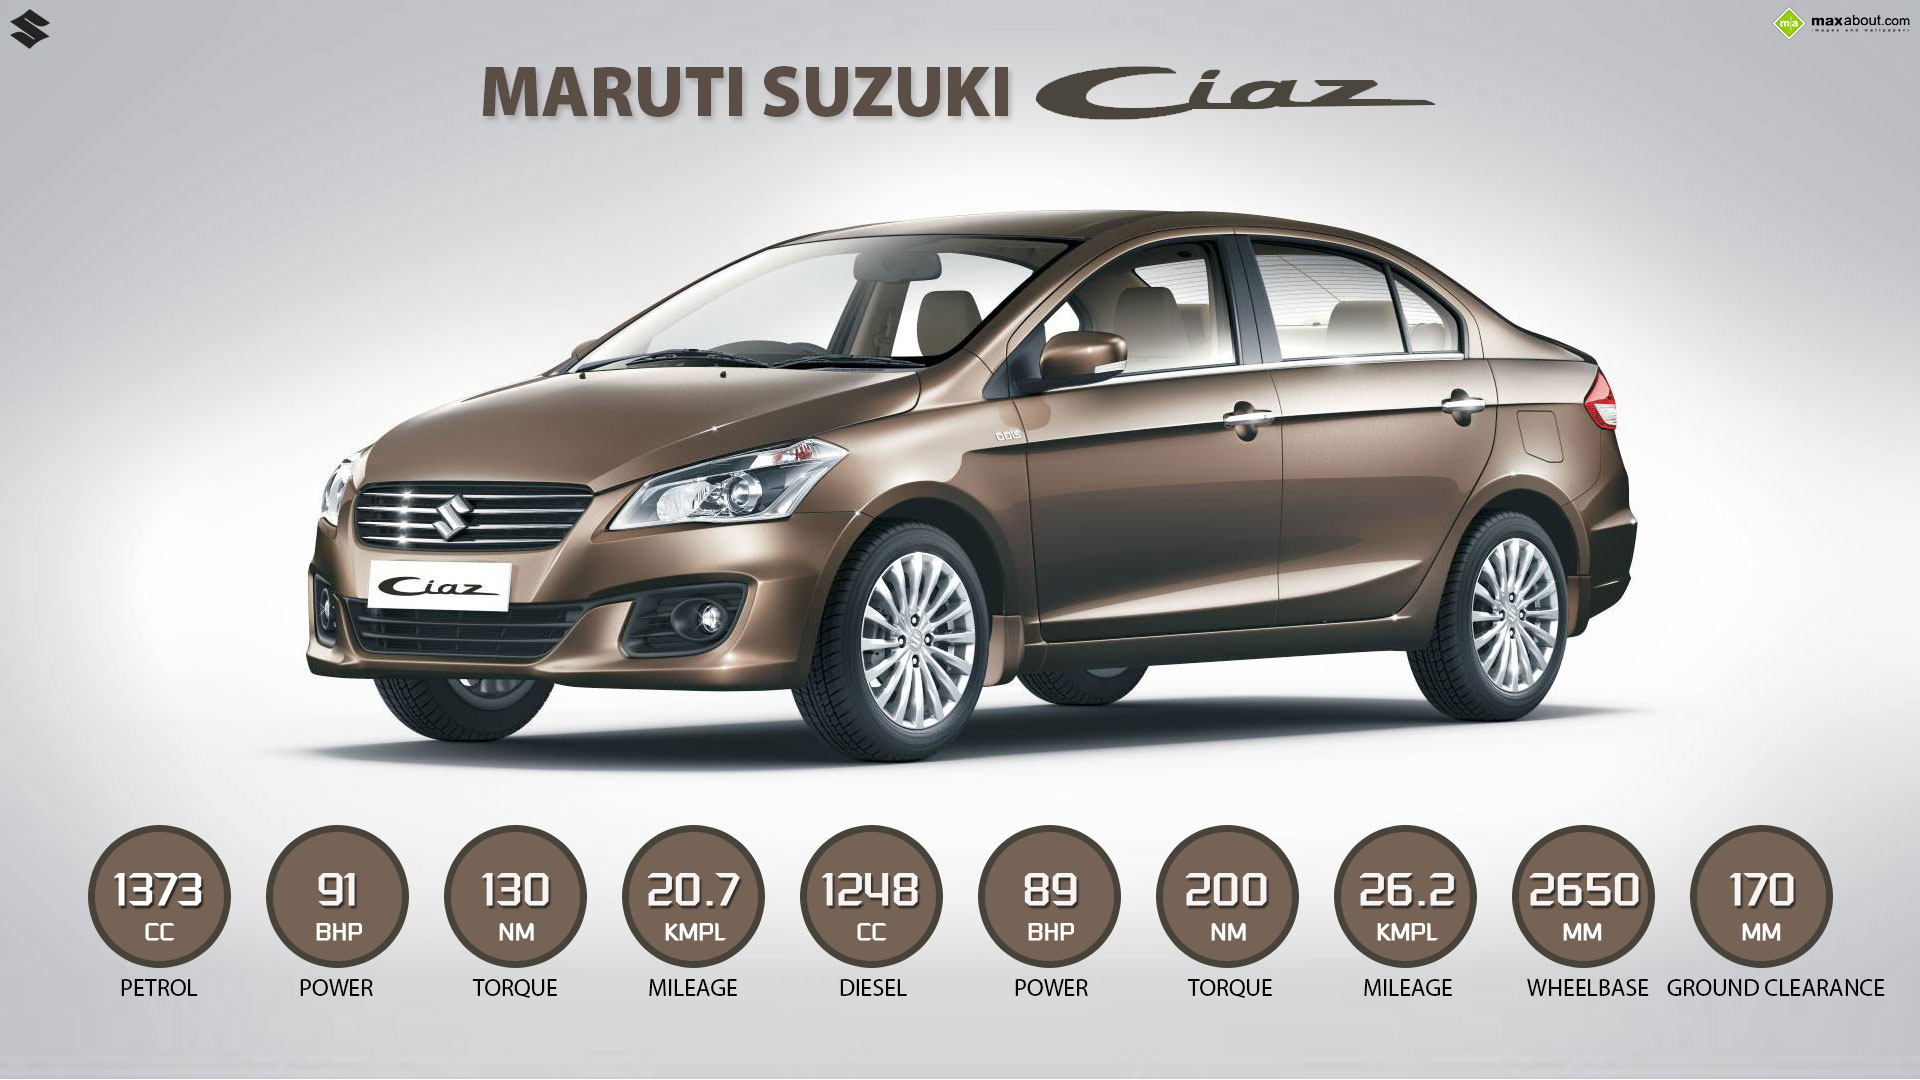 Maruti suzuki new car model and price